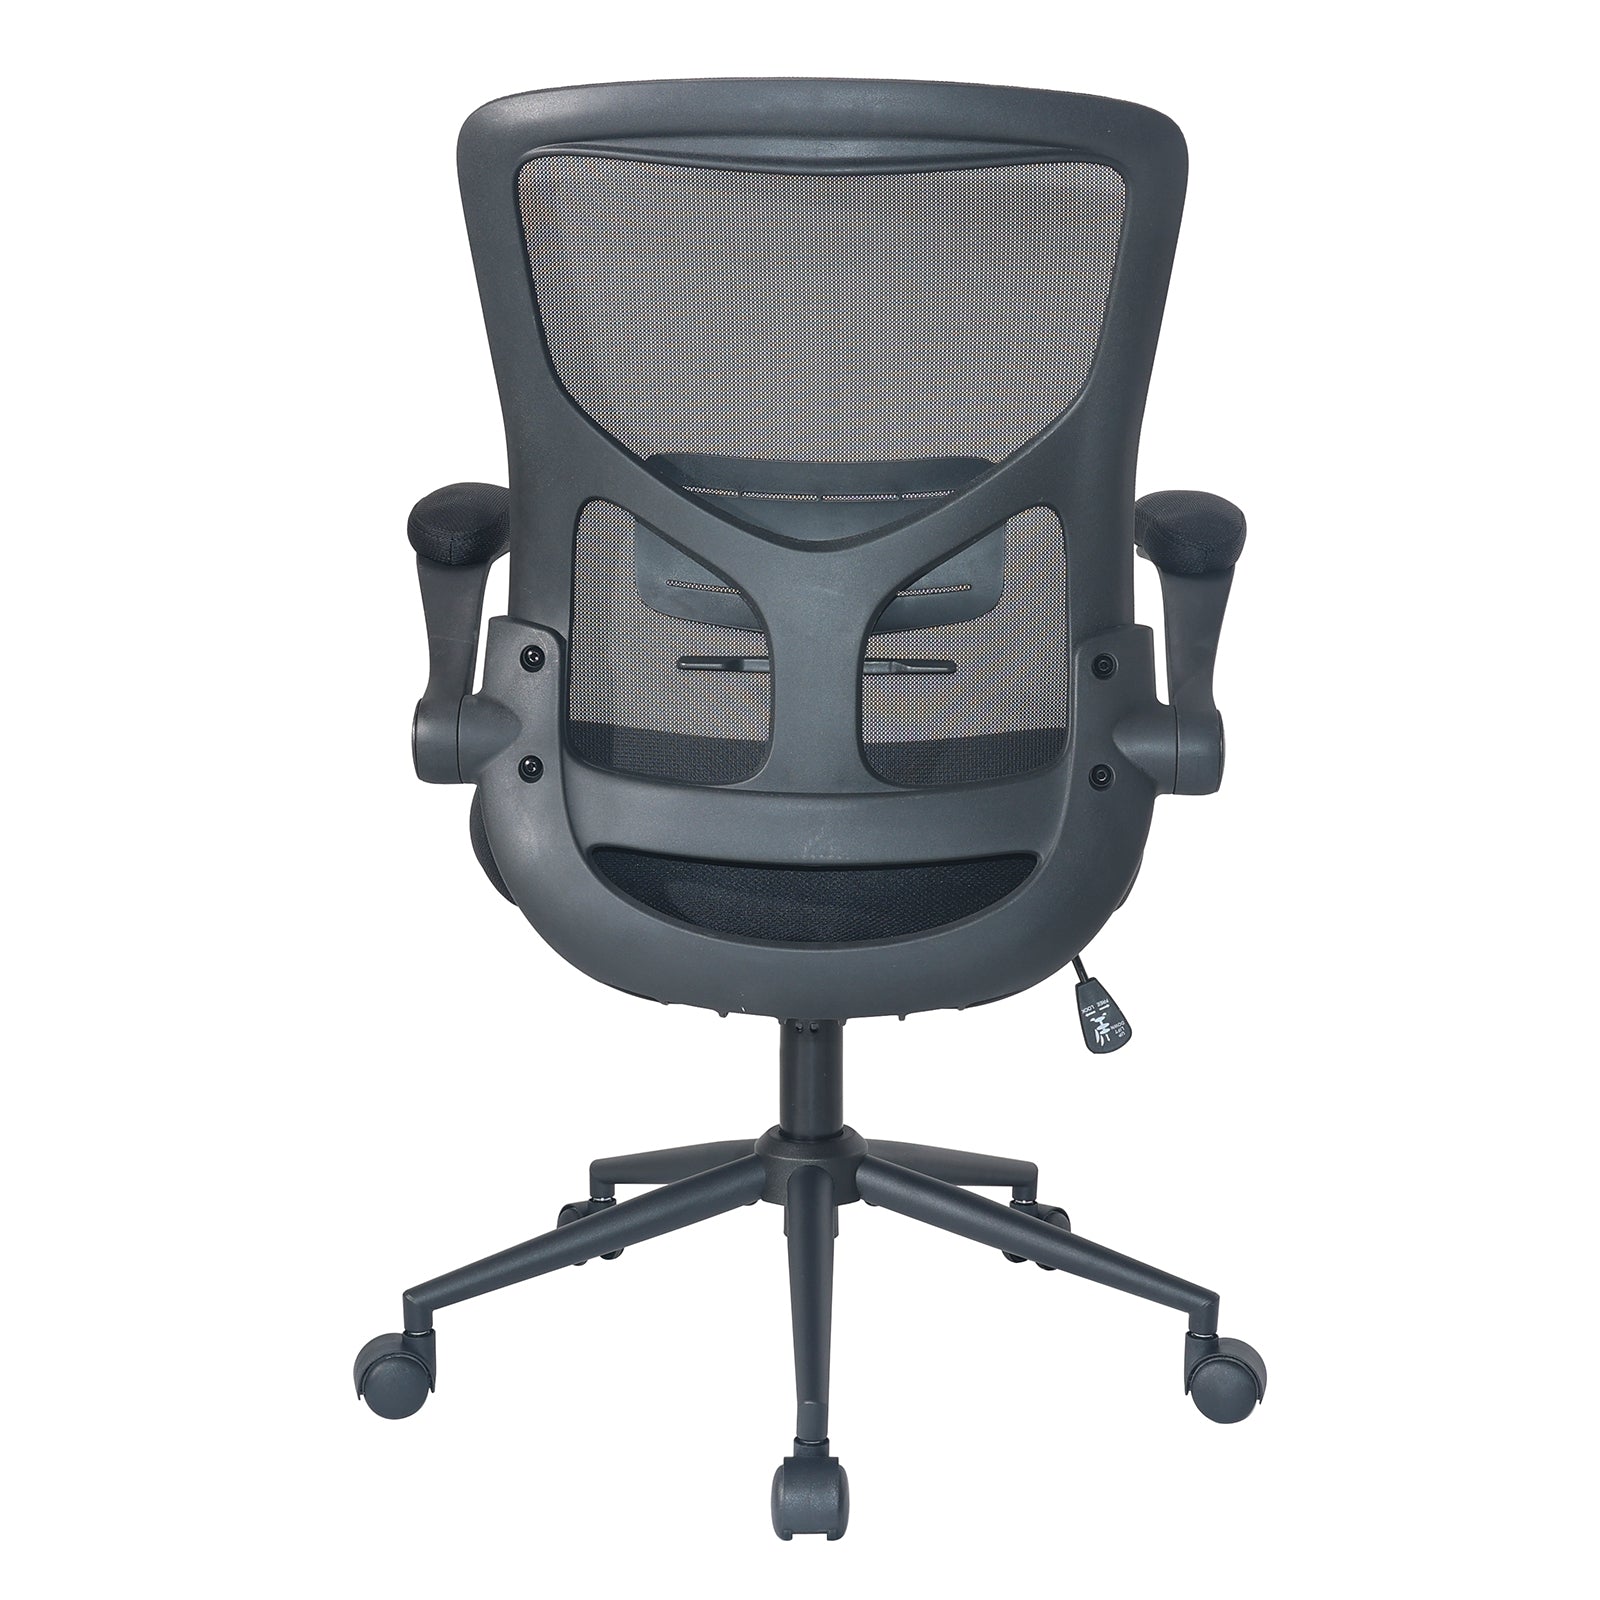 KLASIKA Office Desk Chair Ergonomic Mesh Chair Adjustable Height and Lumbar Support Swivel Lumbar Support Desk Computer Chair with Flip up Armrests